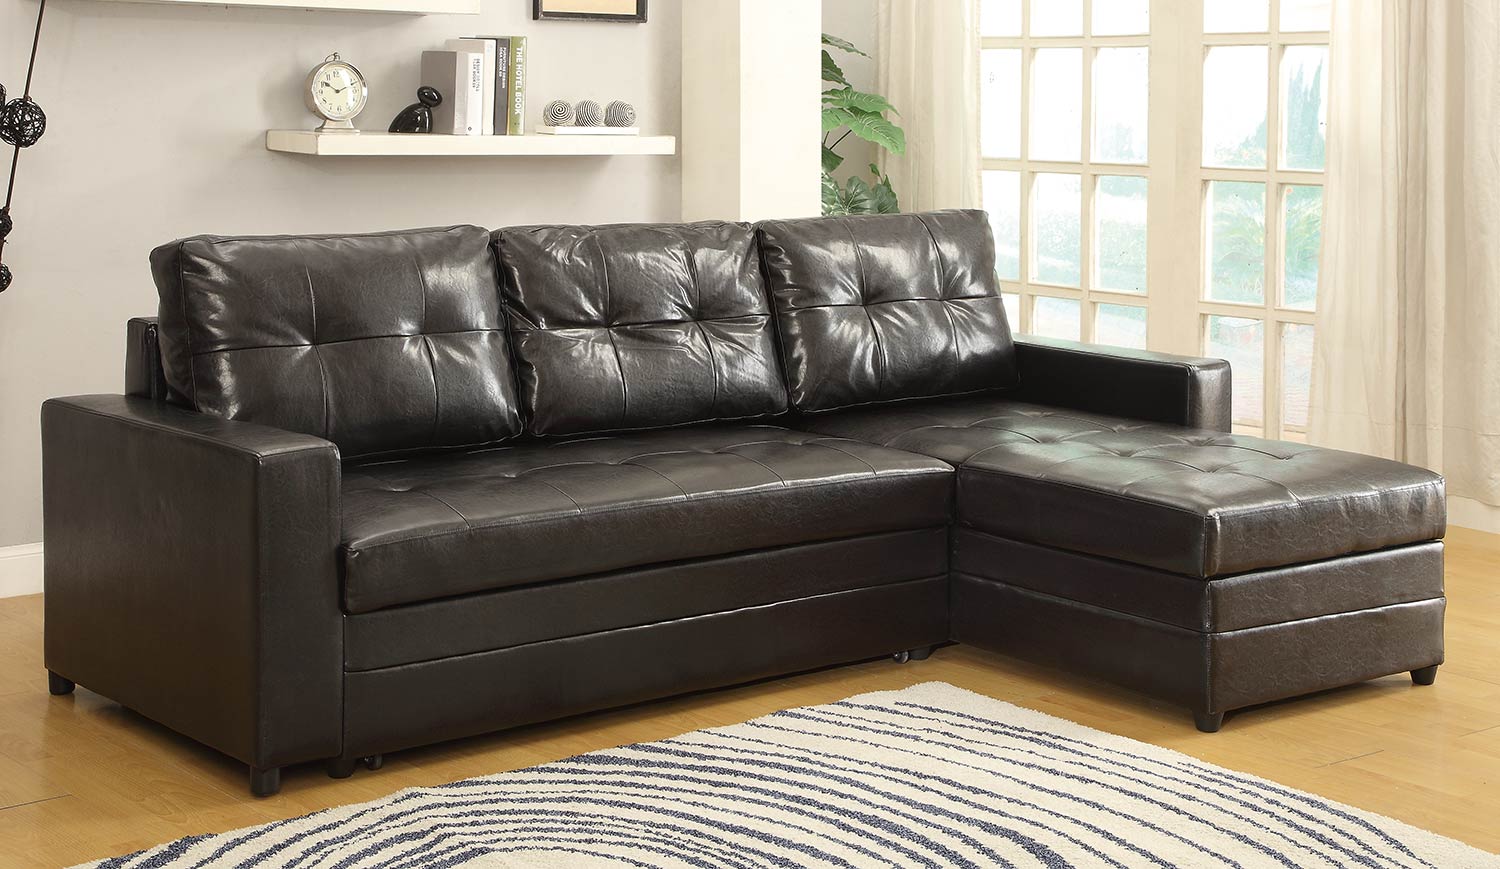 Homelegance Kemen Elegant Lounger Sofa Bed - Dark Brown